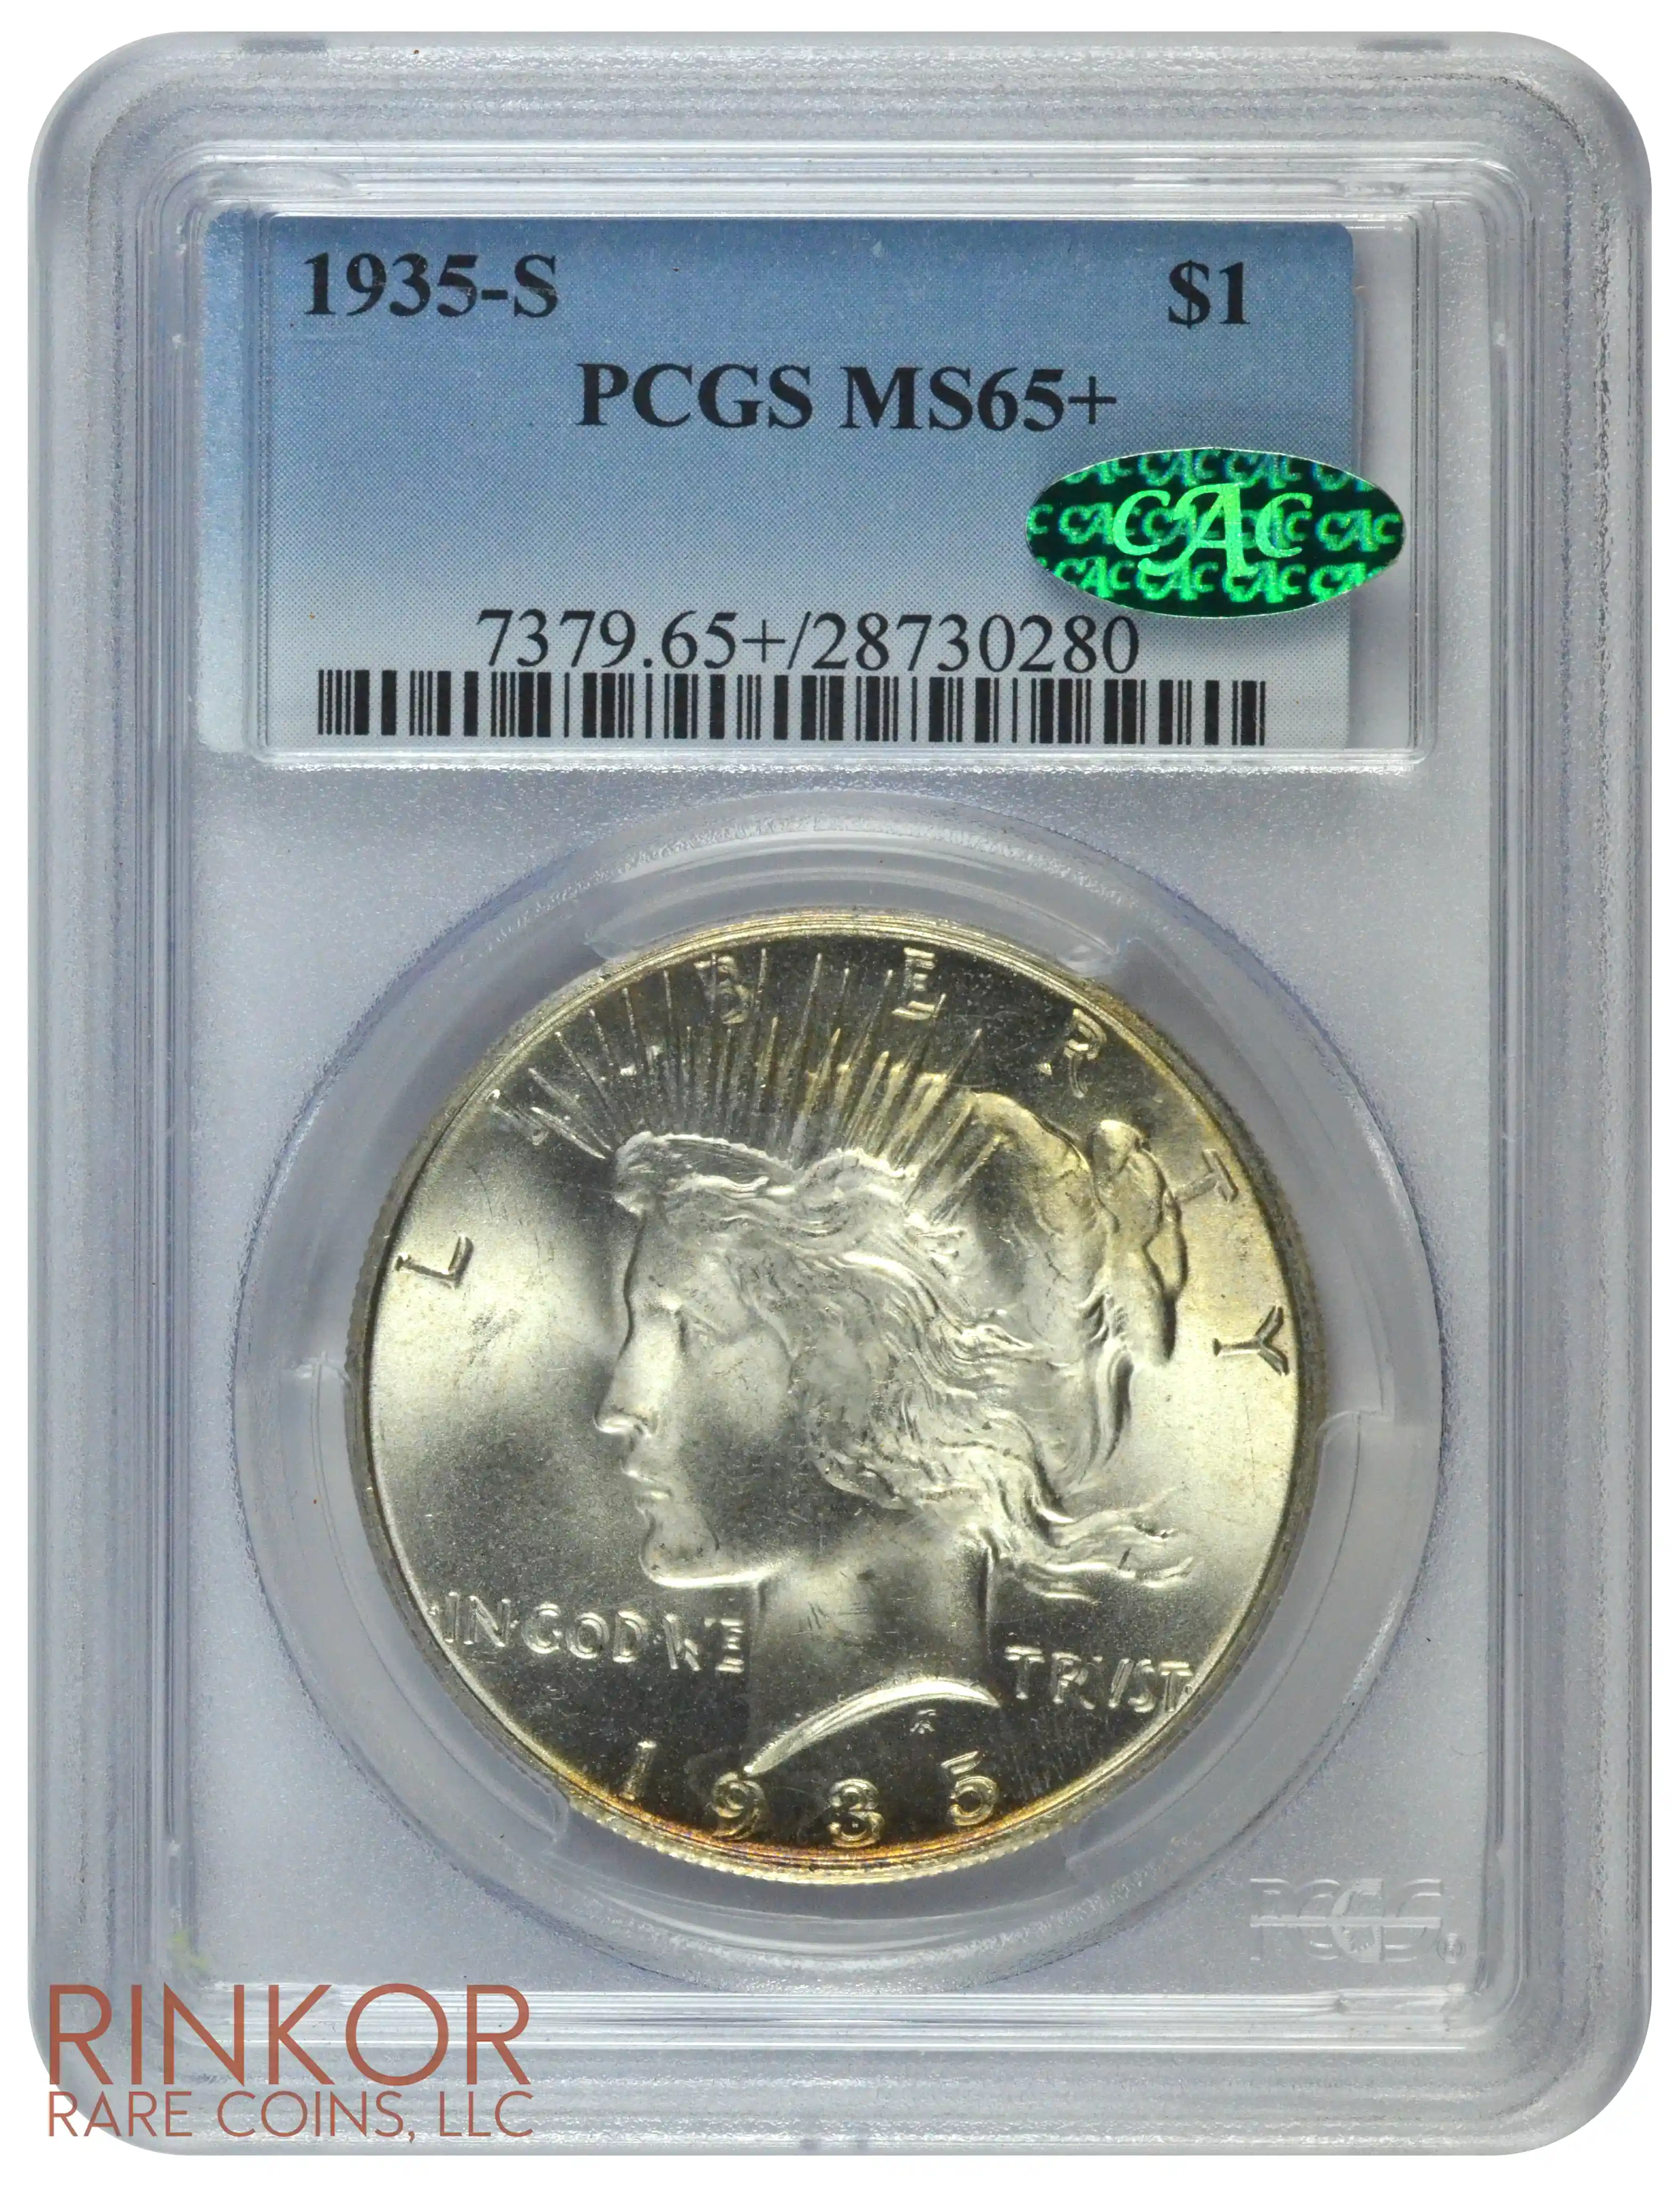 1935-S $1 PCGS MS 65+ CAC